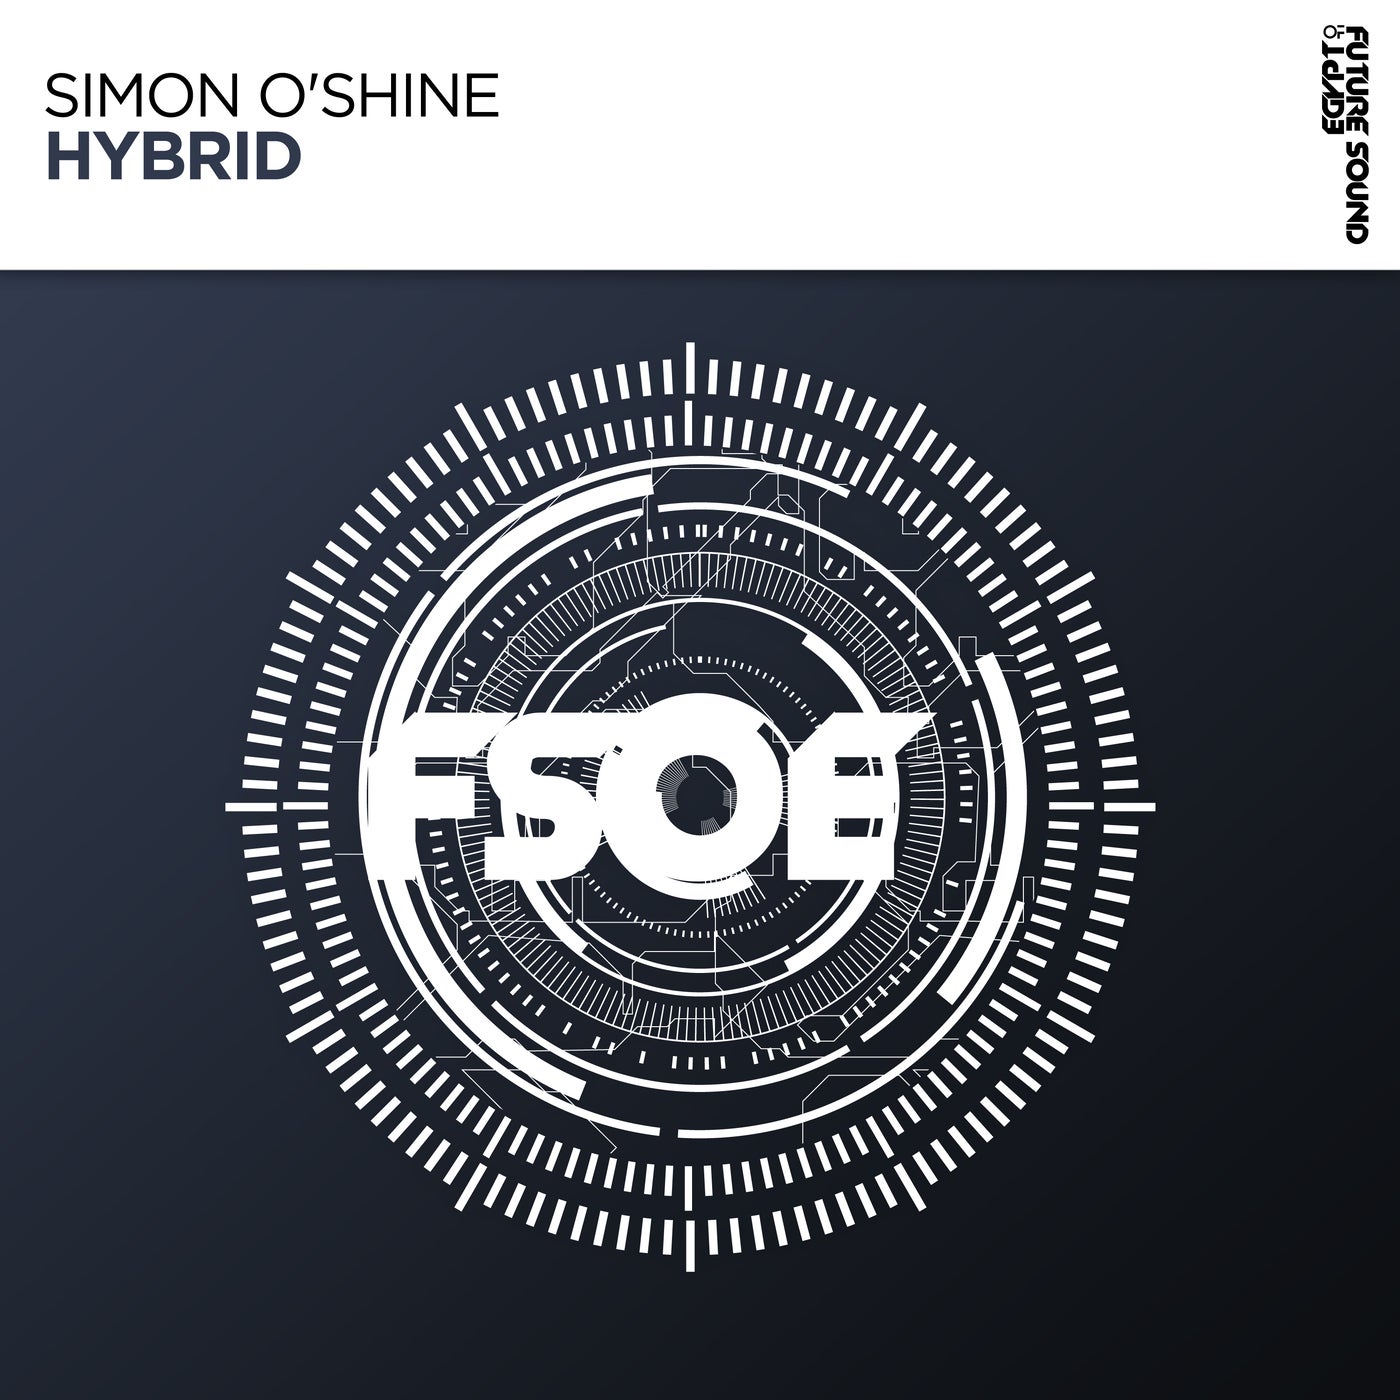 Simon O'Shine Music & Downloads on Beatport